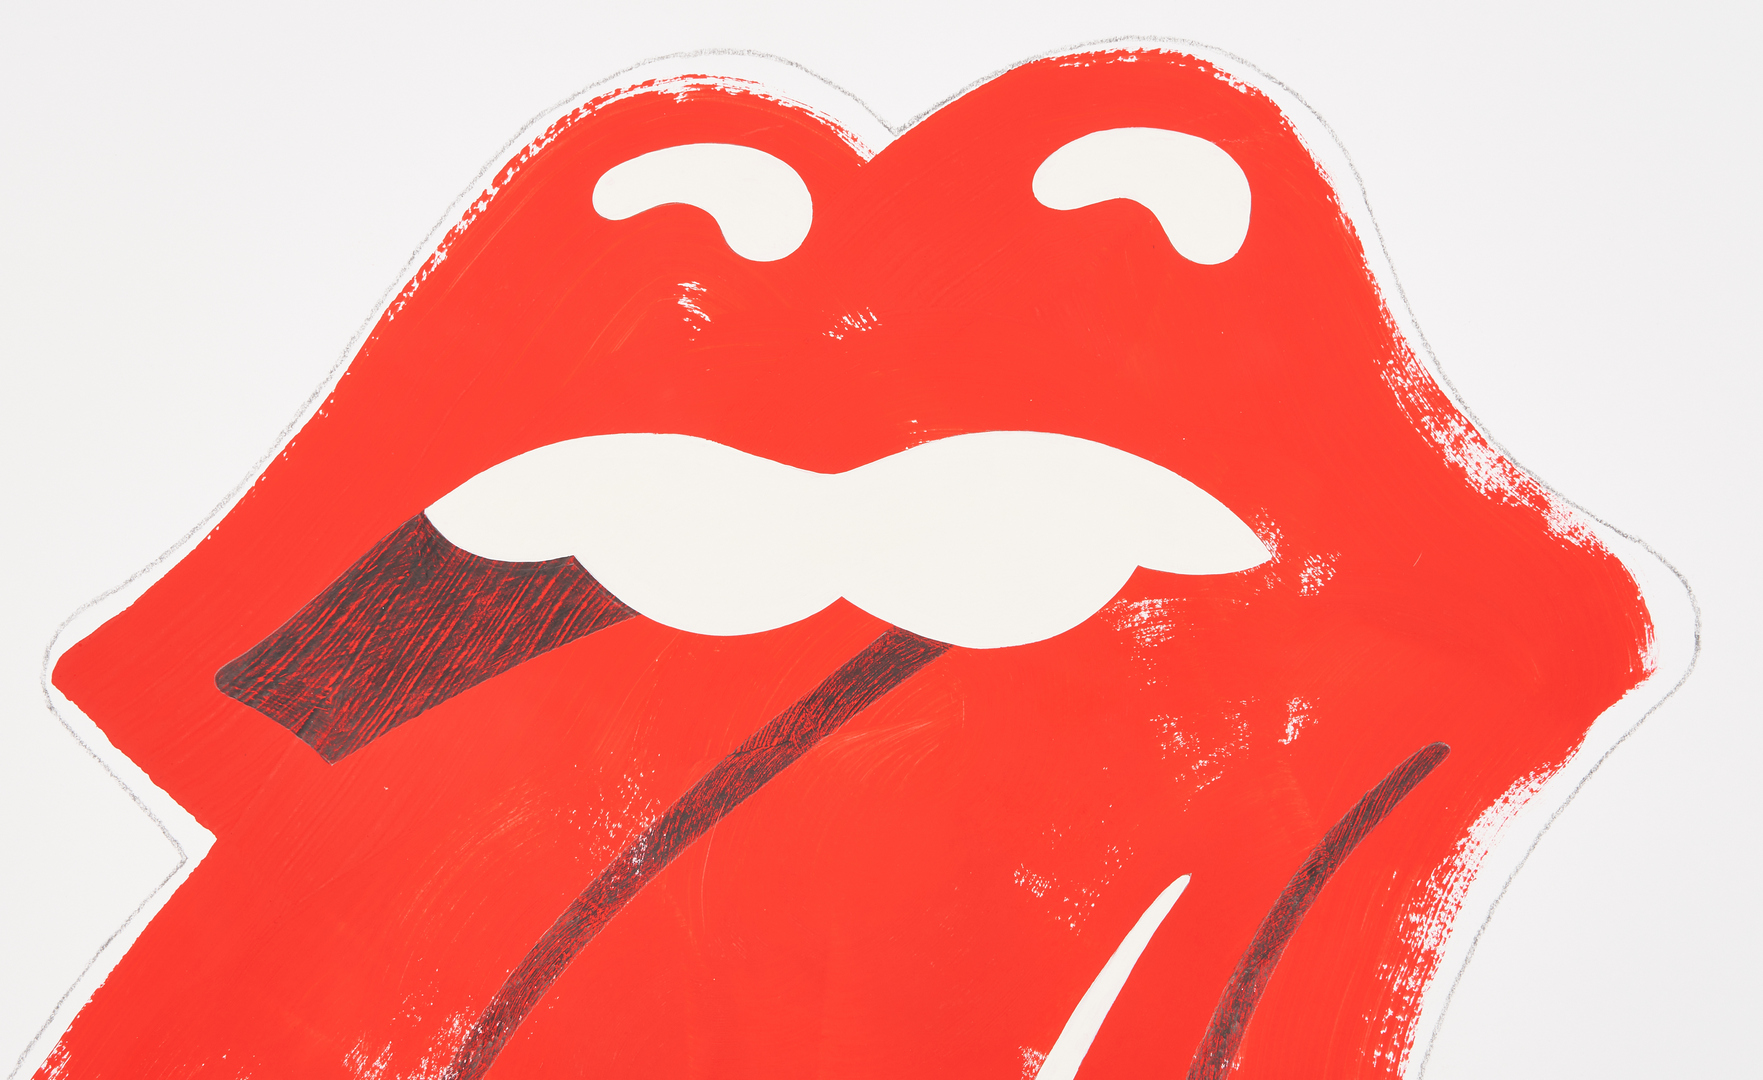 Lot 564: John Pasche, Rolling Stones Logo, gouache on paper